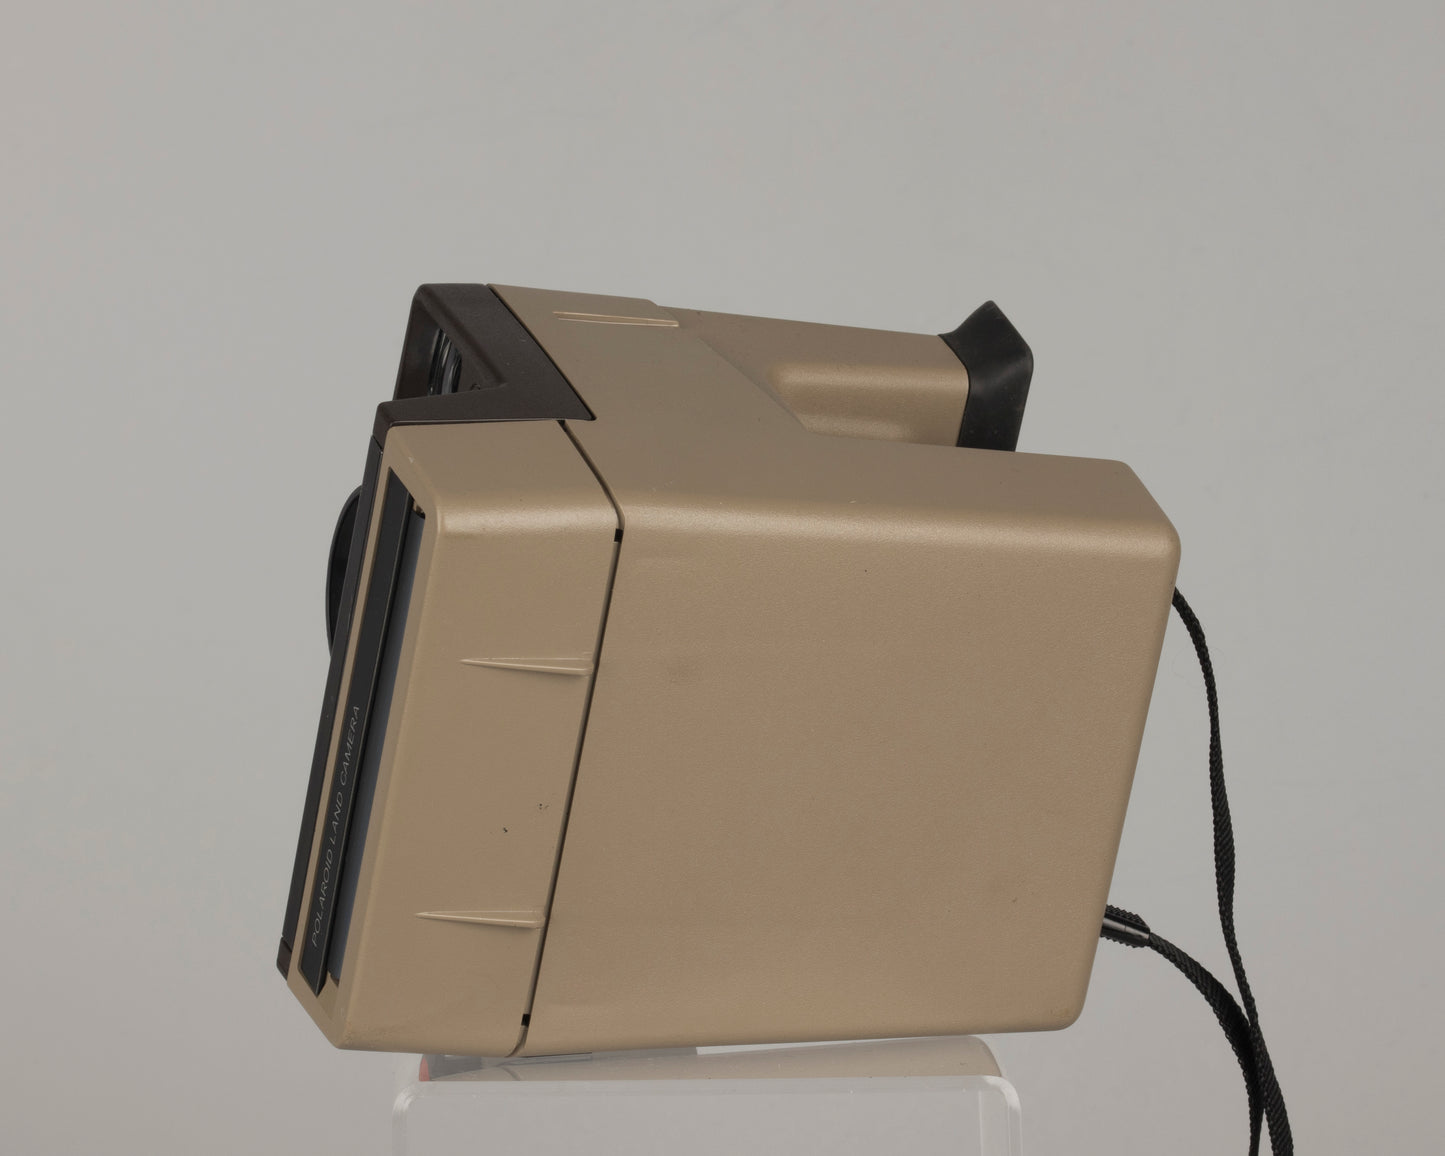 Appareil photo instantané Polaroid Polasonic 4000 (alias One Step Sonar) avec flash Polatronic